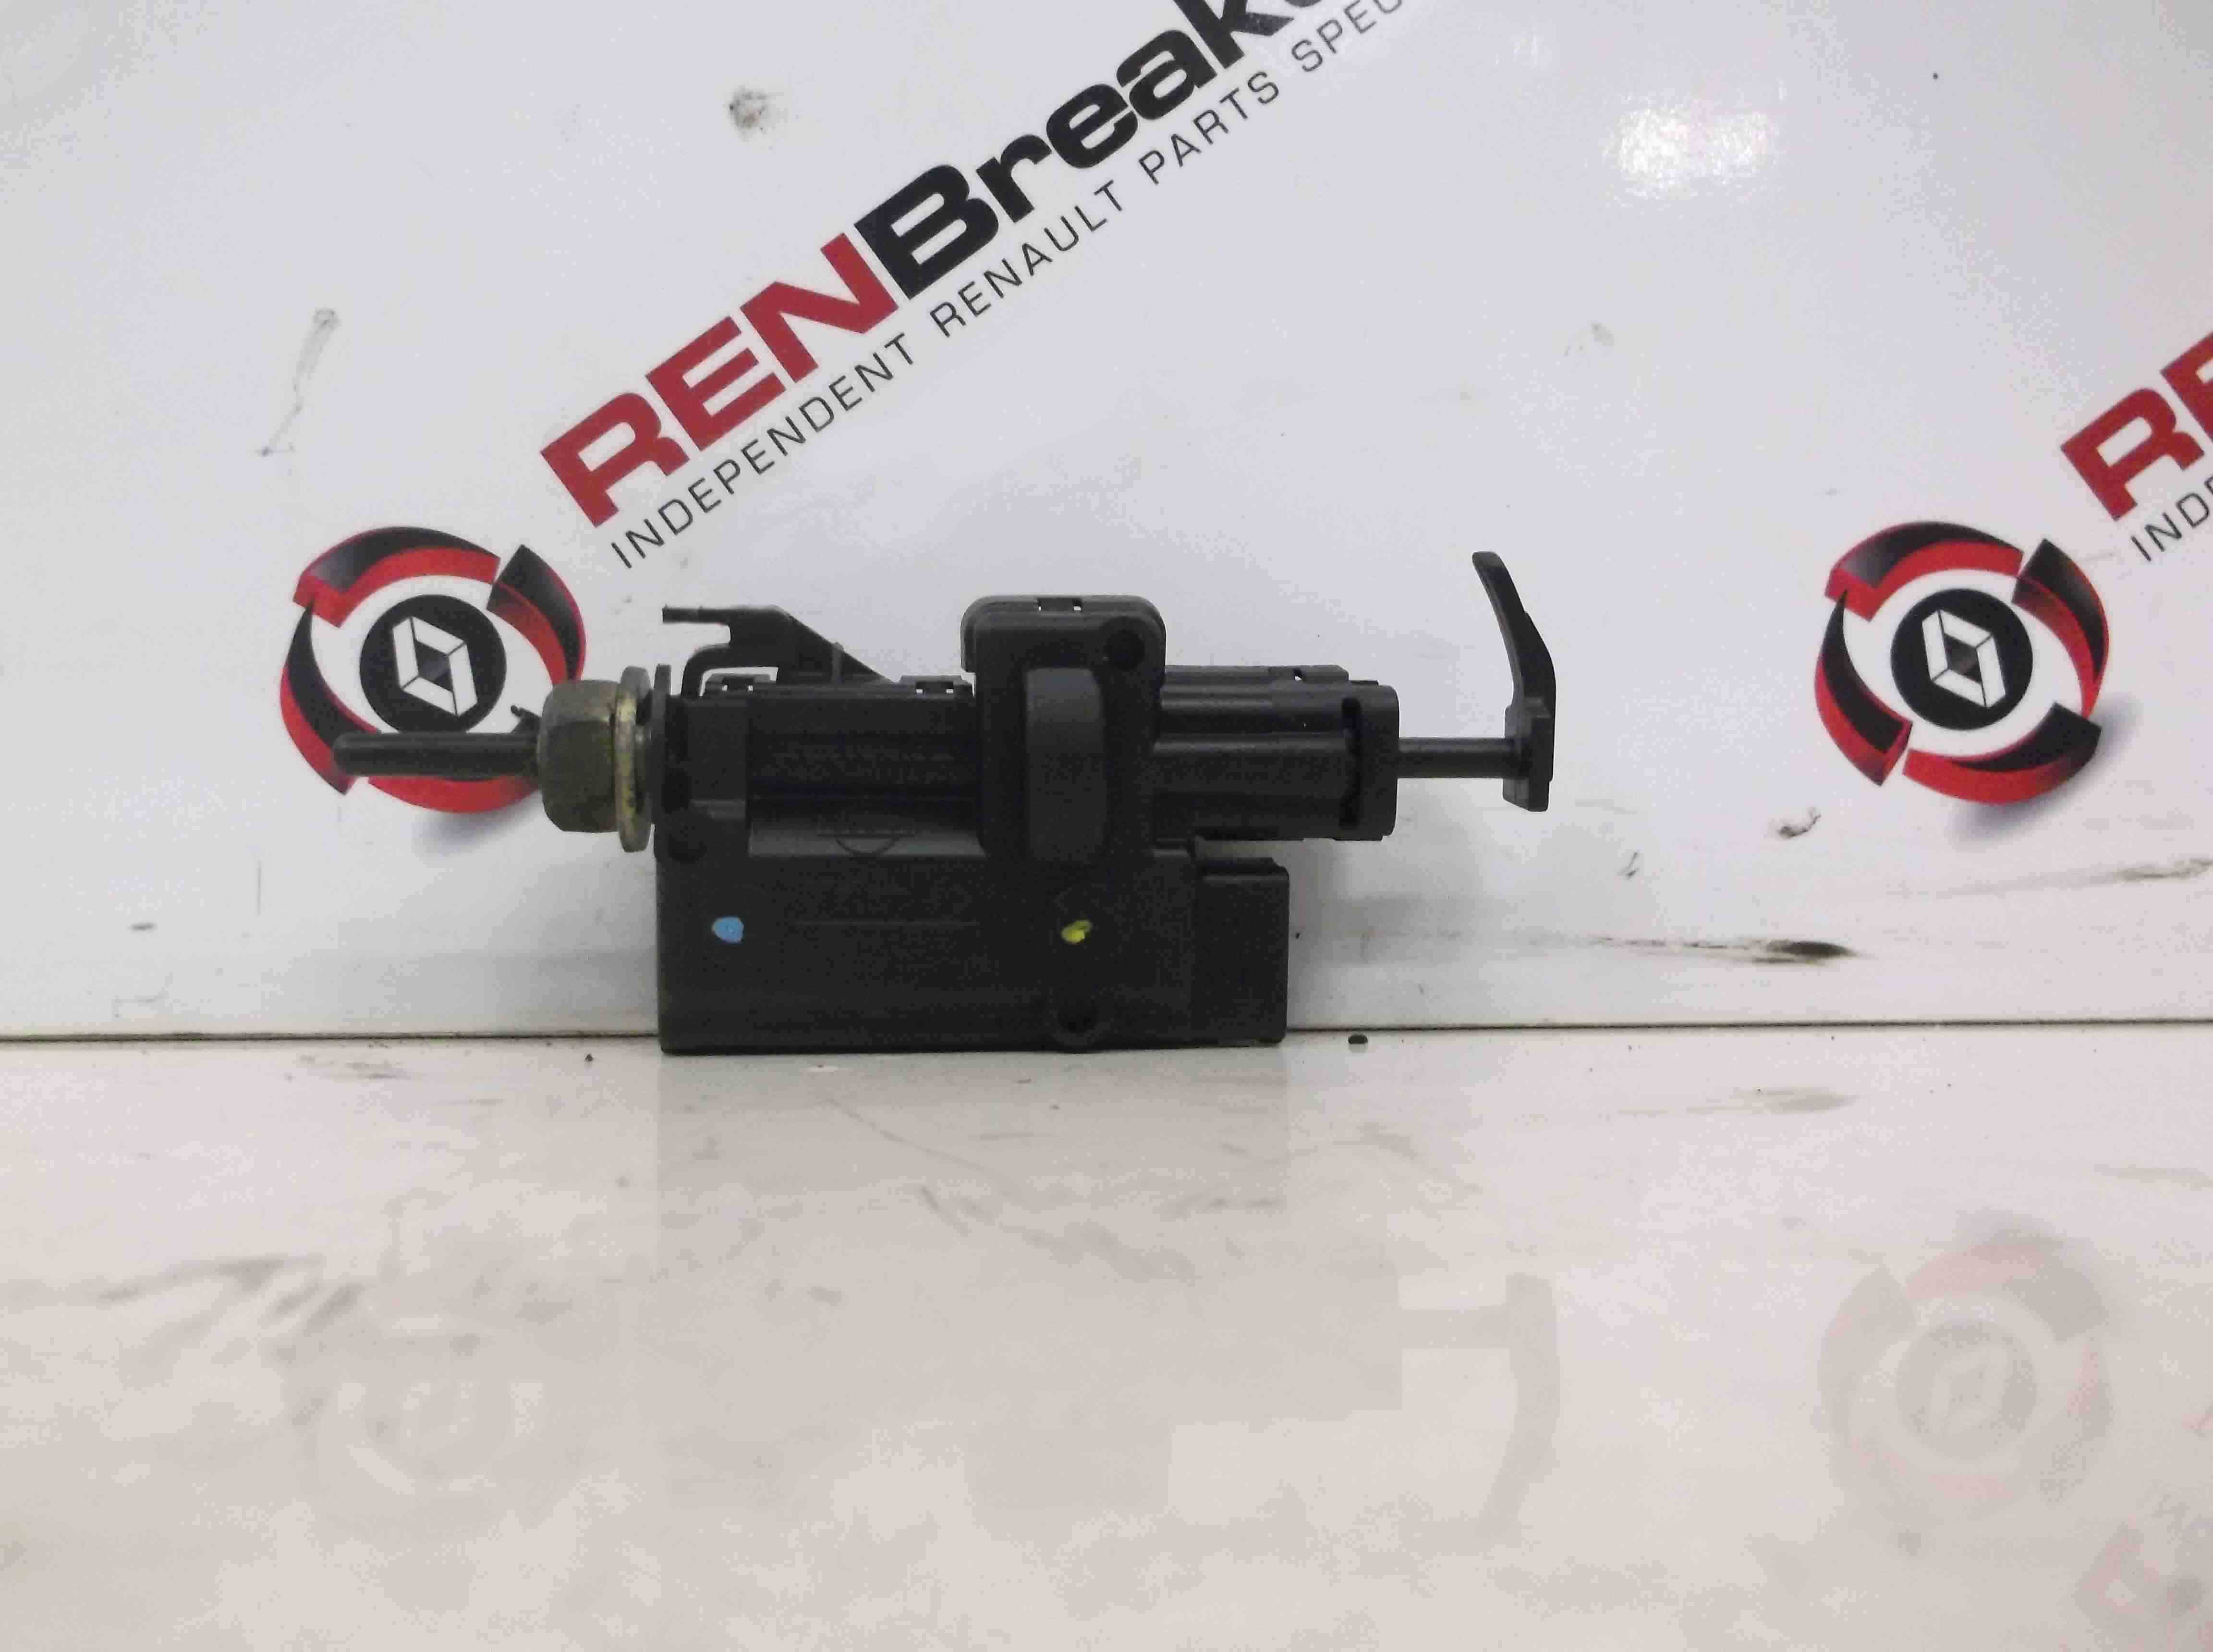 Renault Megane Scenic 2003-2009 Petrol Fuel Cap Solenoid Lock